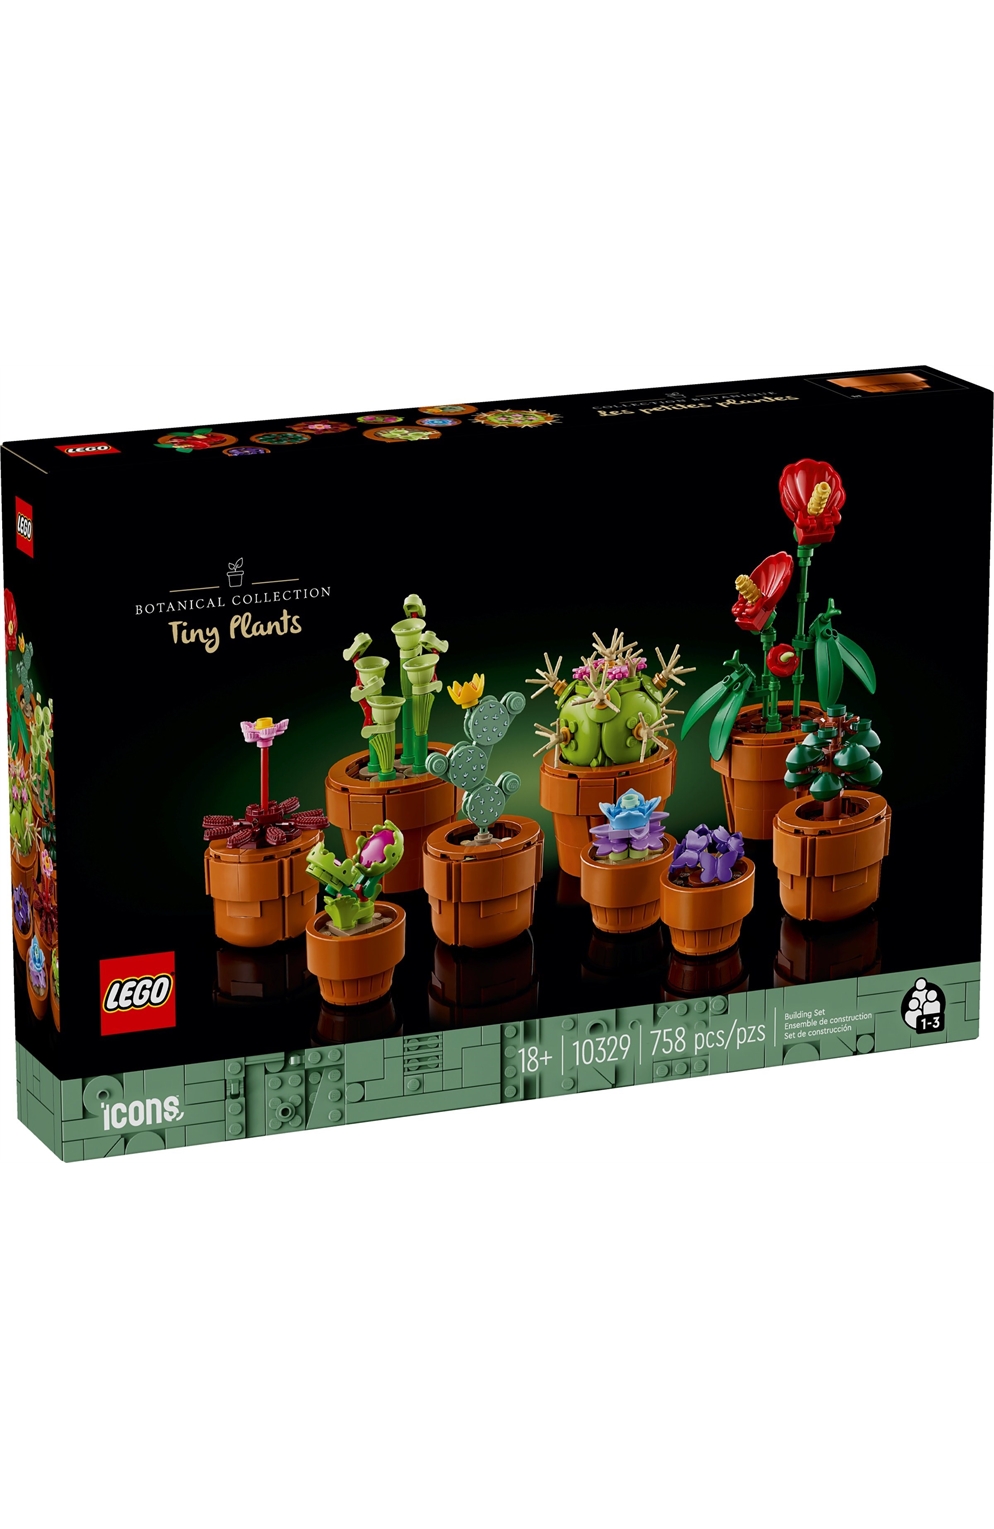 LEGO Icons Botanical Collection Tiny Plants • Set 10329